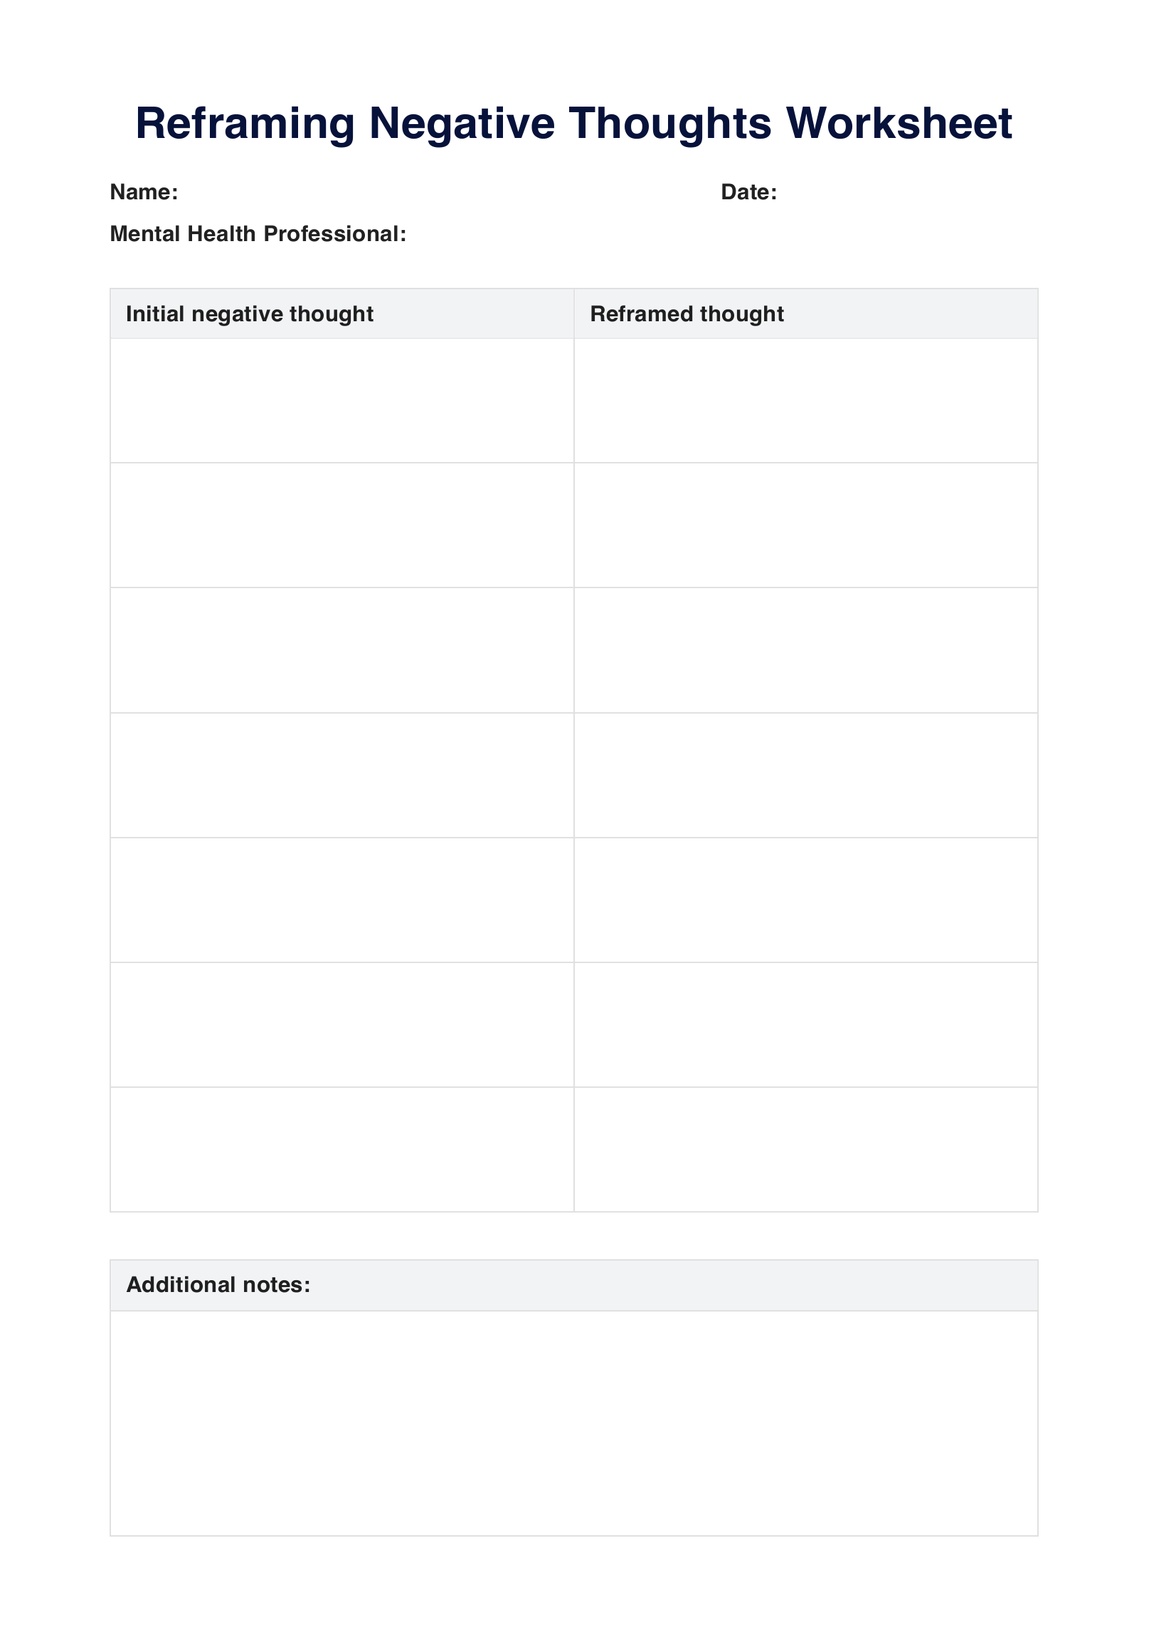 Reframing Negative Thoughts Worksheet PDF Example